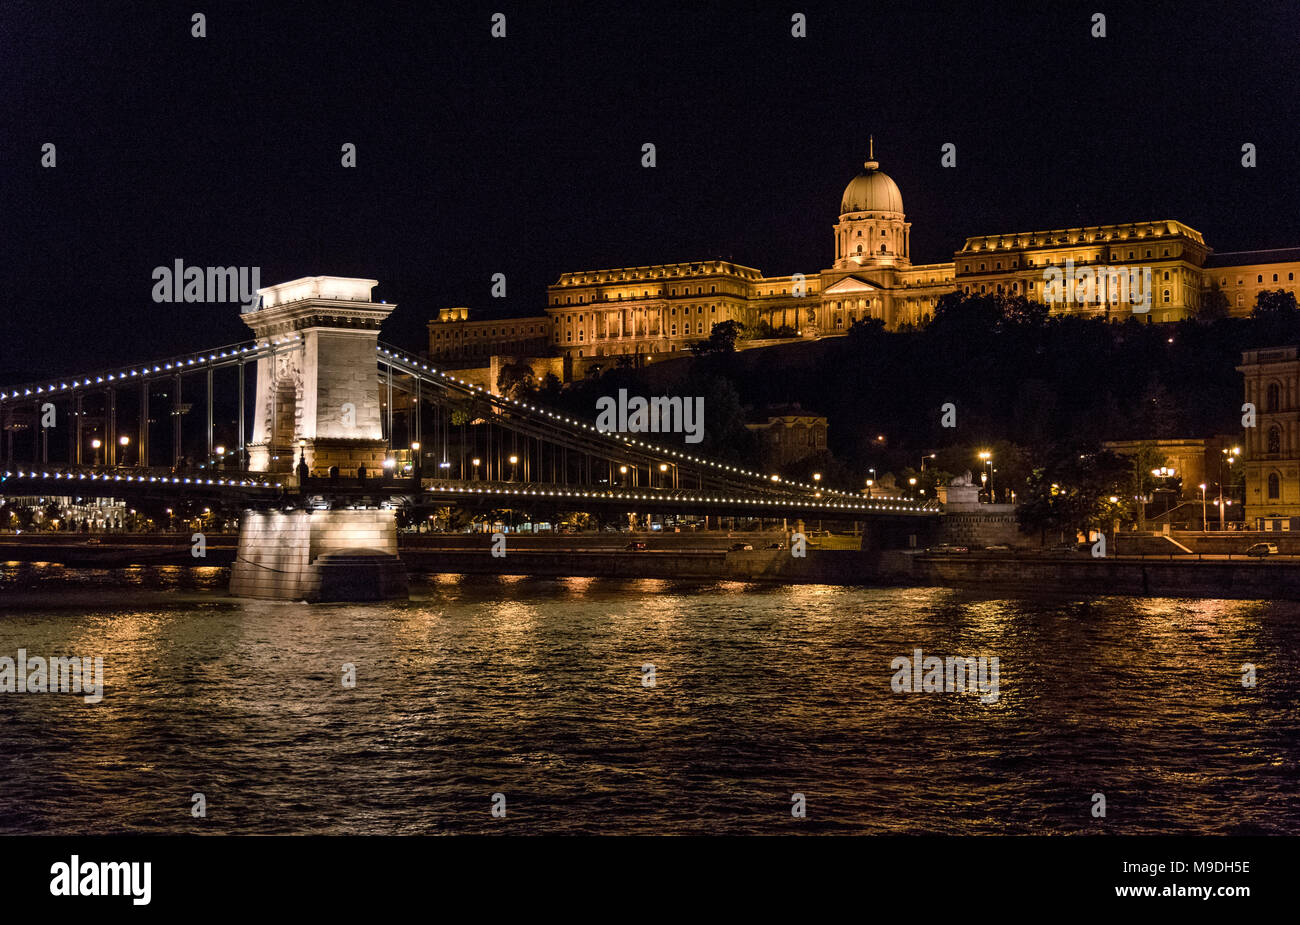 Buda Castle (Palace) and chain bridge, Budapest Stock Photo